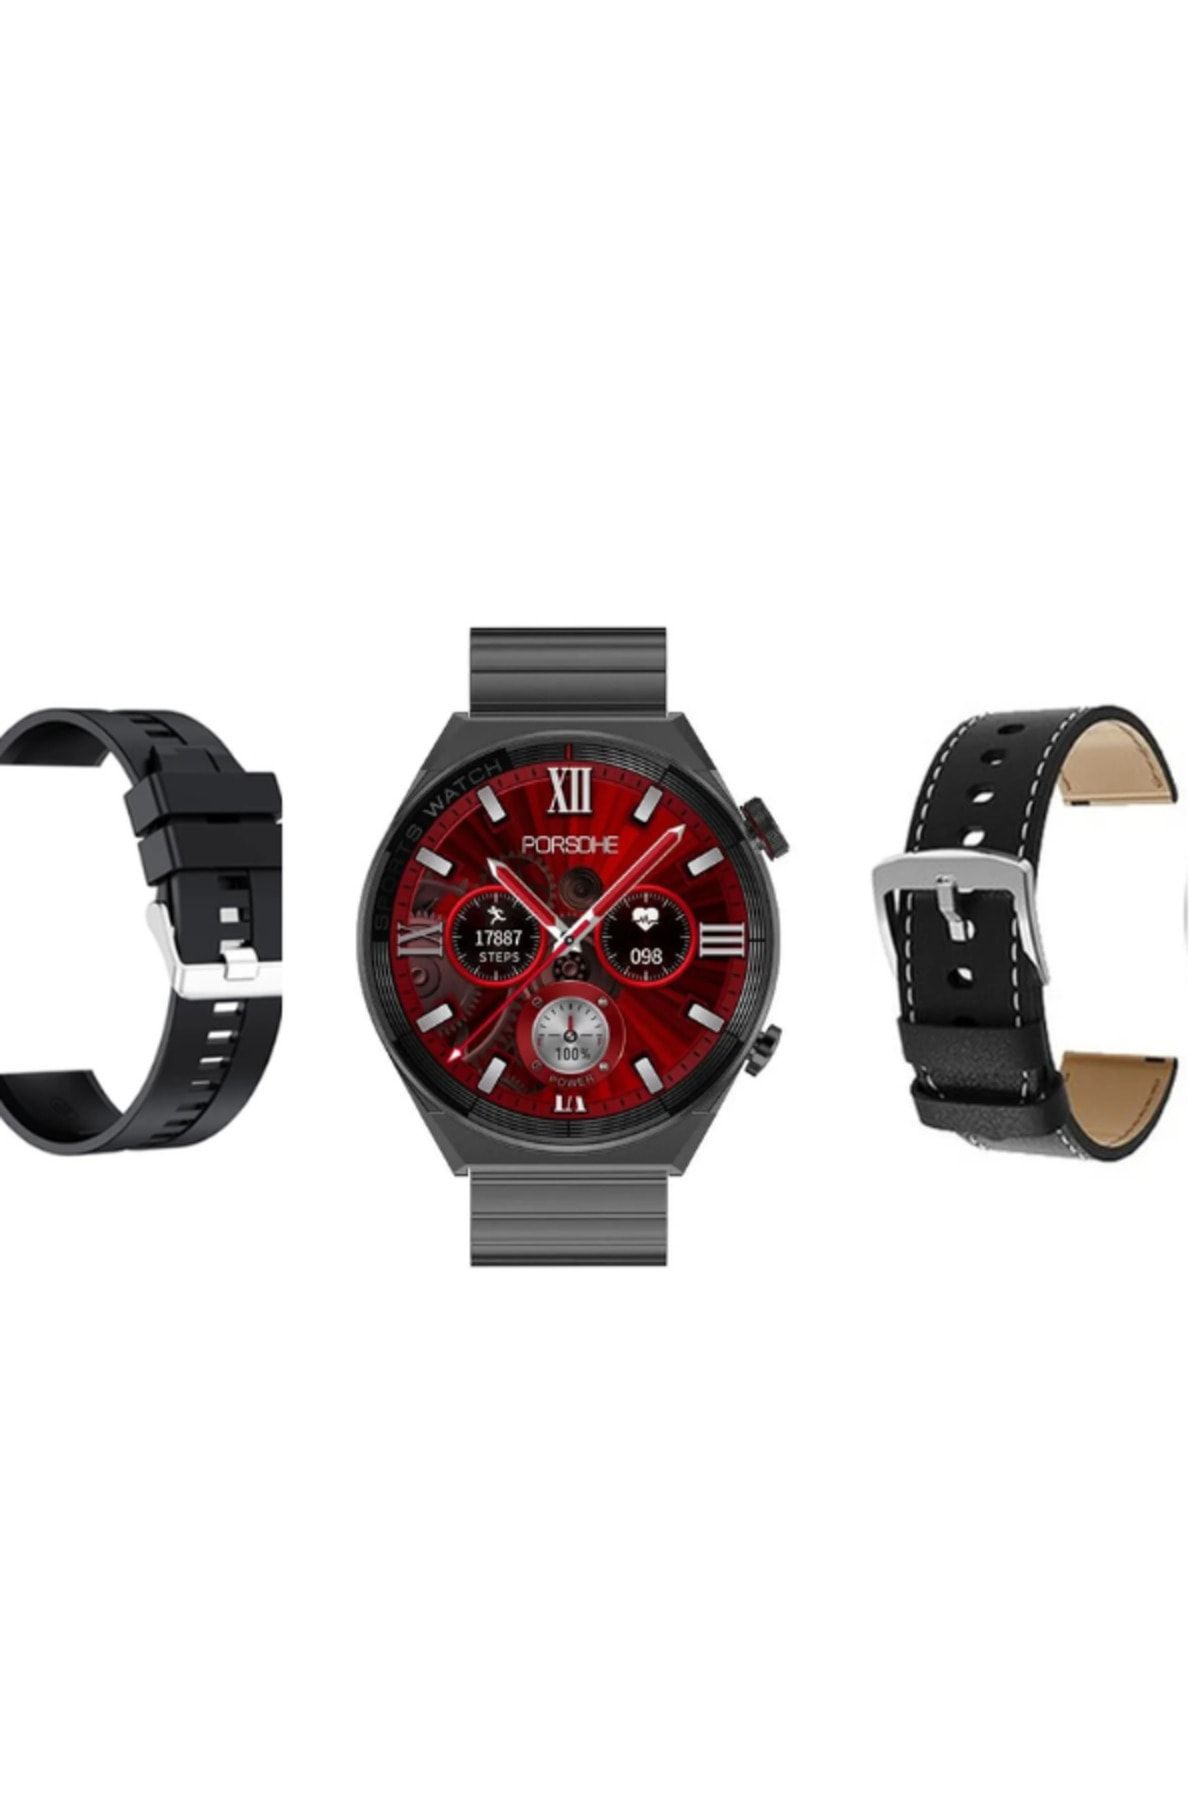 Teknoloji Gelsin GT3 Max Smart watch Tam Ekran Akıllı Saat 1.45' 44mm 3 Kordonlu Siri Nfc Gps Ios ve Android Uyumlu